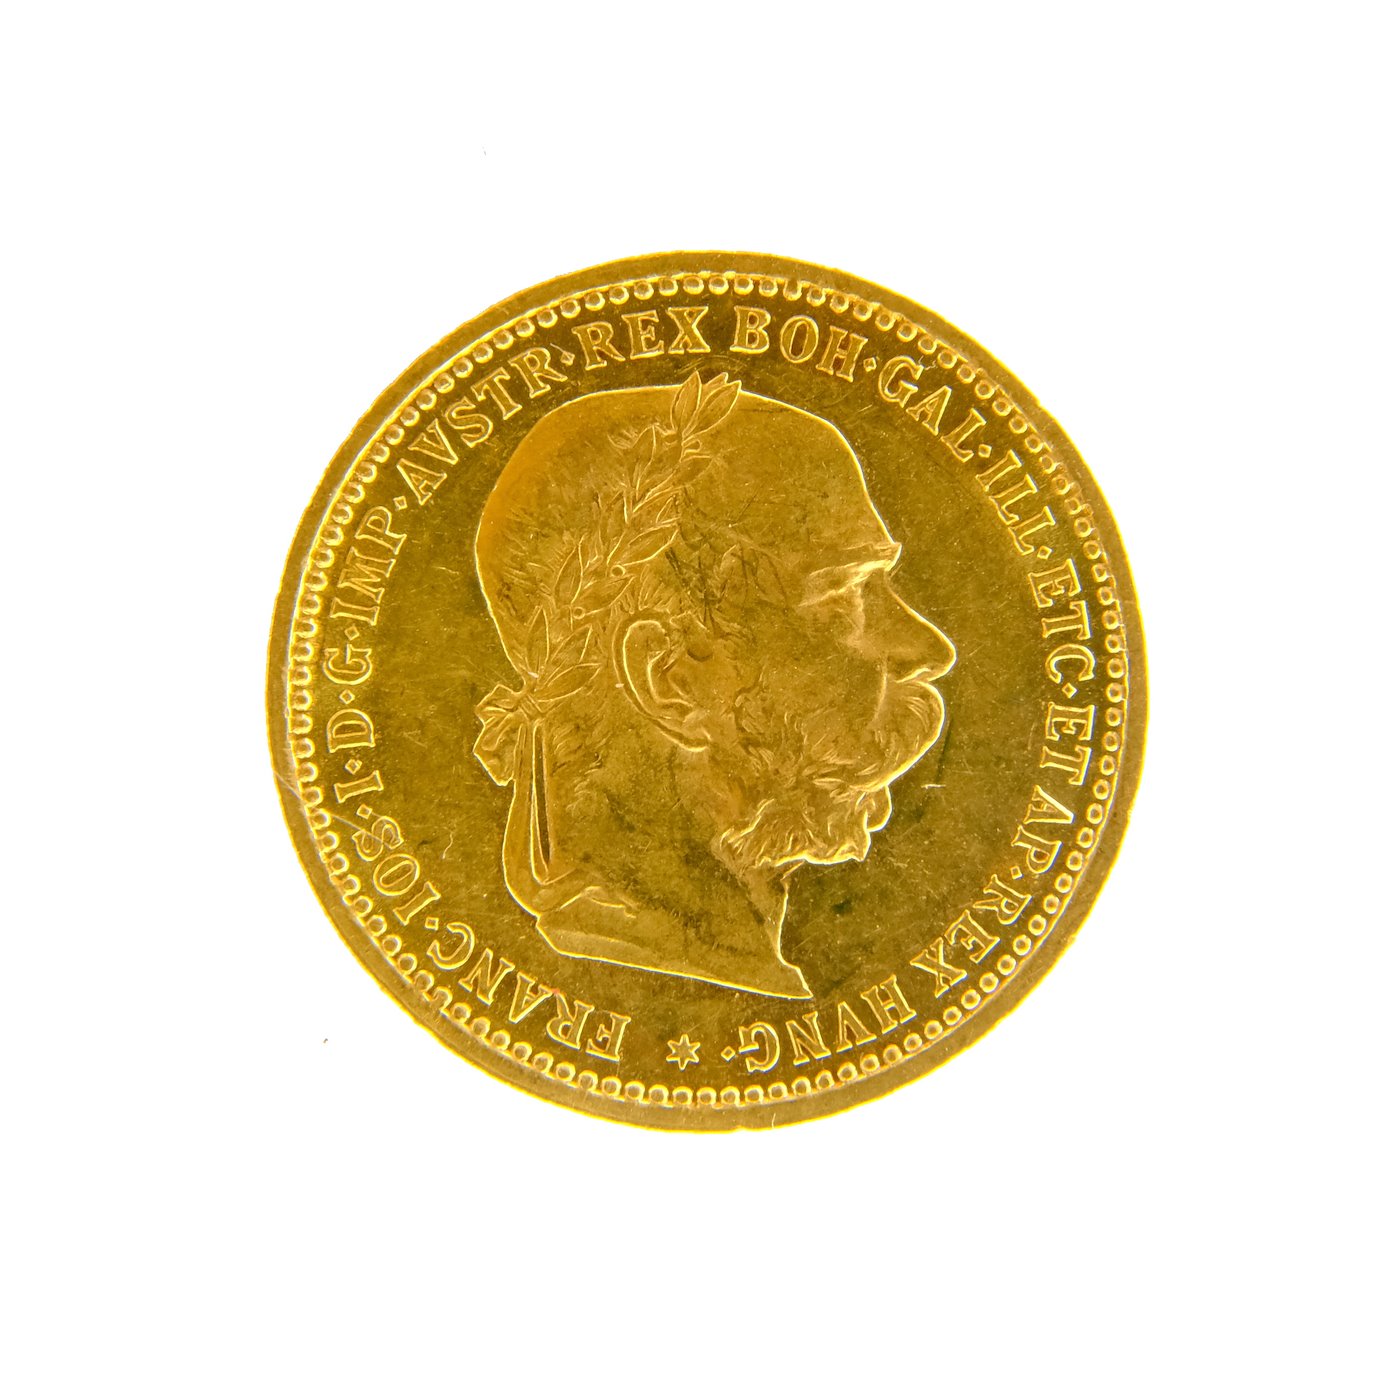 .. - Rakousko Uhersko zlatá 10 Koruna 1905 rakouská,  zlato 900/1000, hrubá hmotnost 3,387g